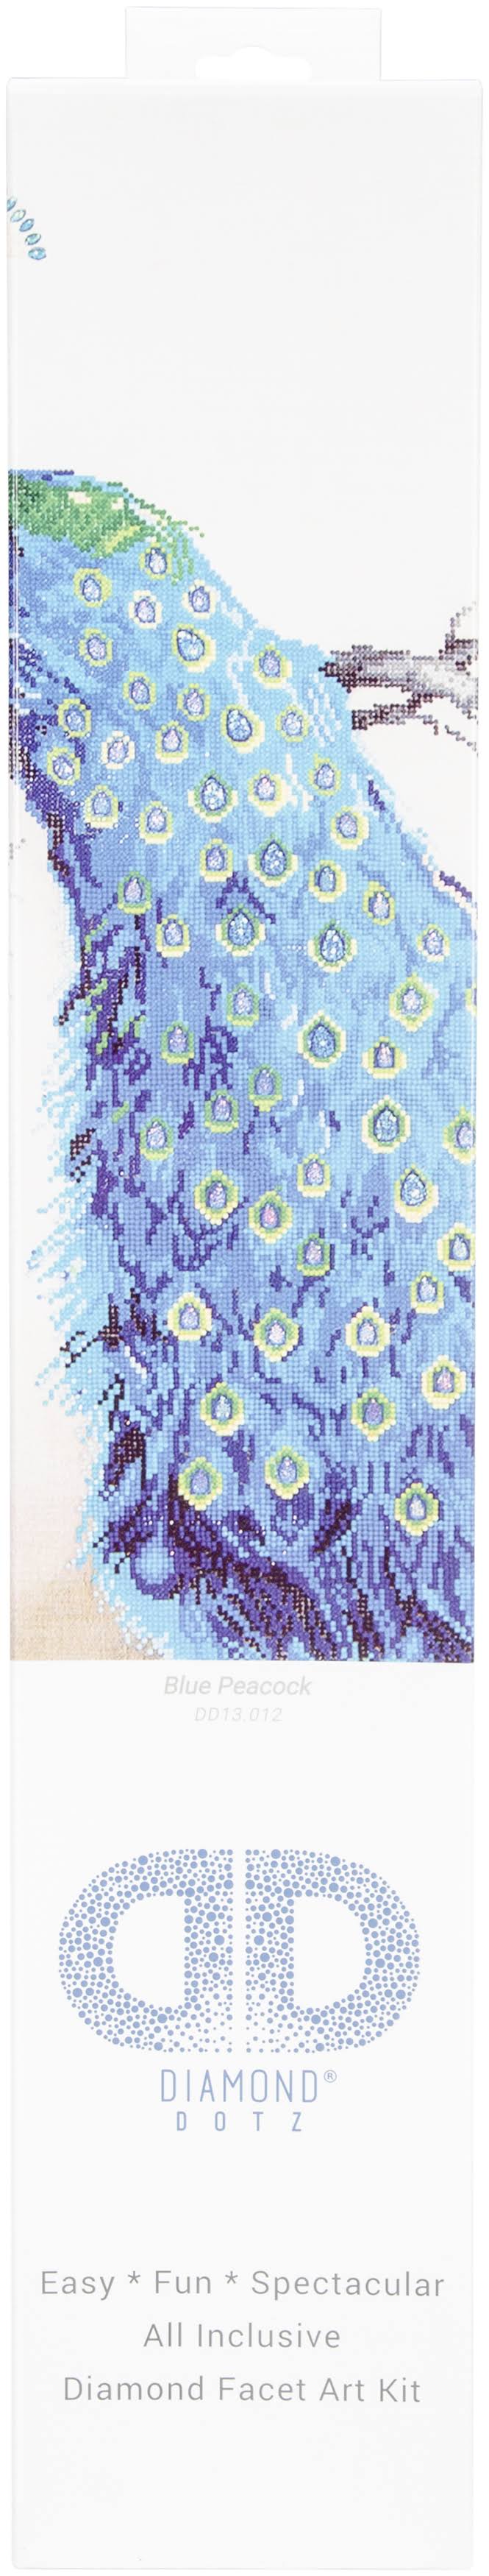 Diamond Dotz Diamond Embroidery Facet Art Kit - Blue Peacock, 25.25" x 34.5"